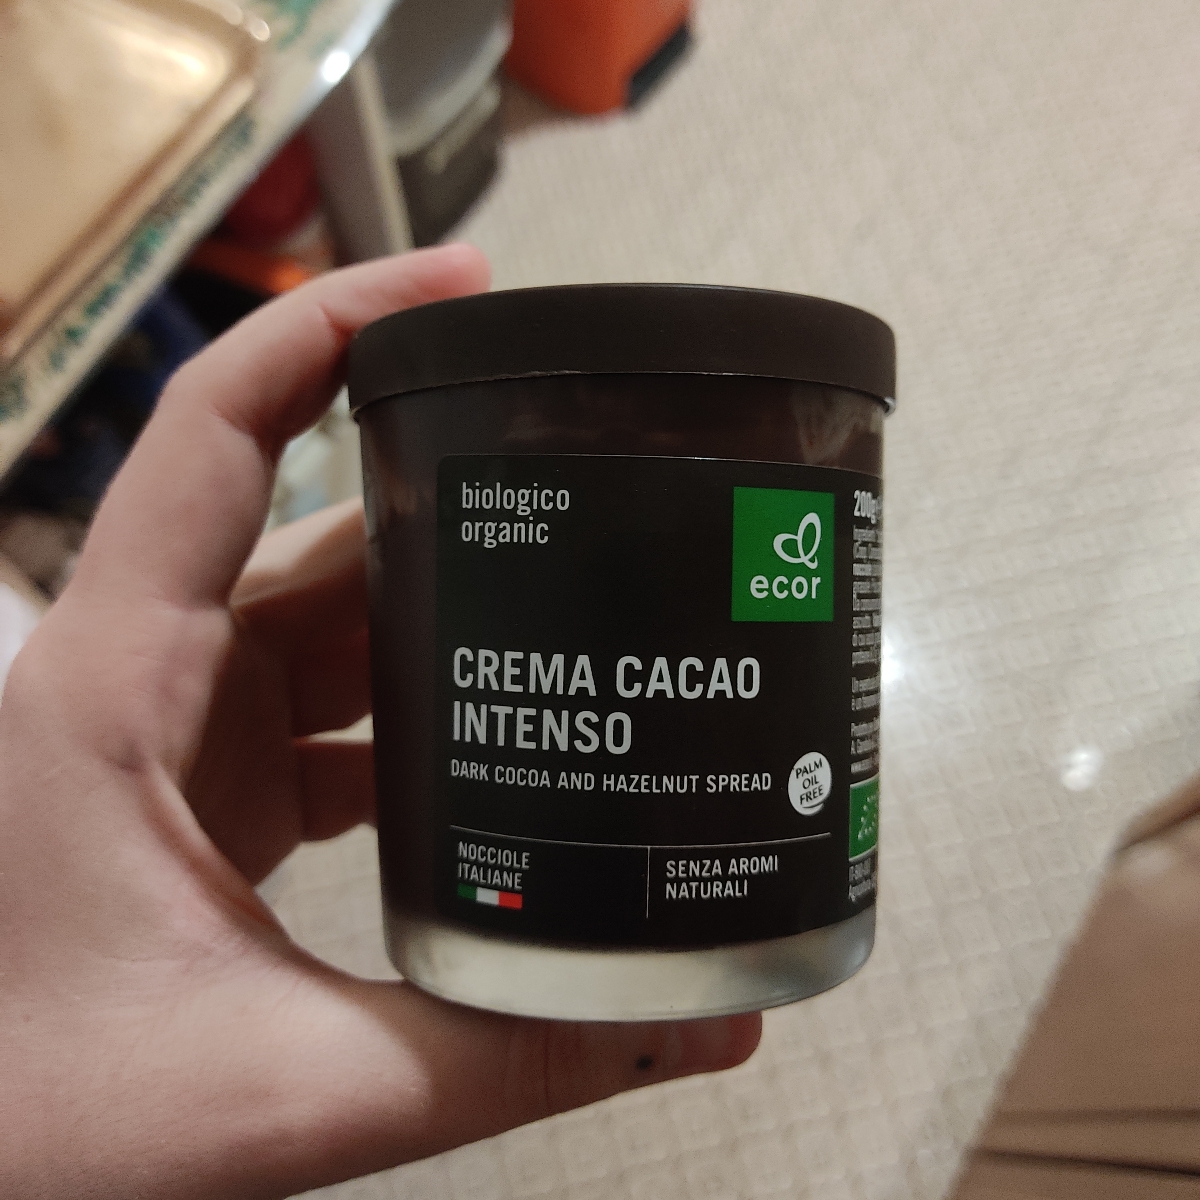 Ecor Crema cacao intenso Reviews | abillion